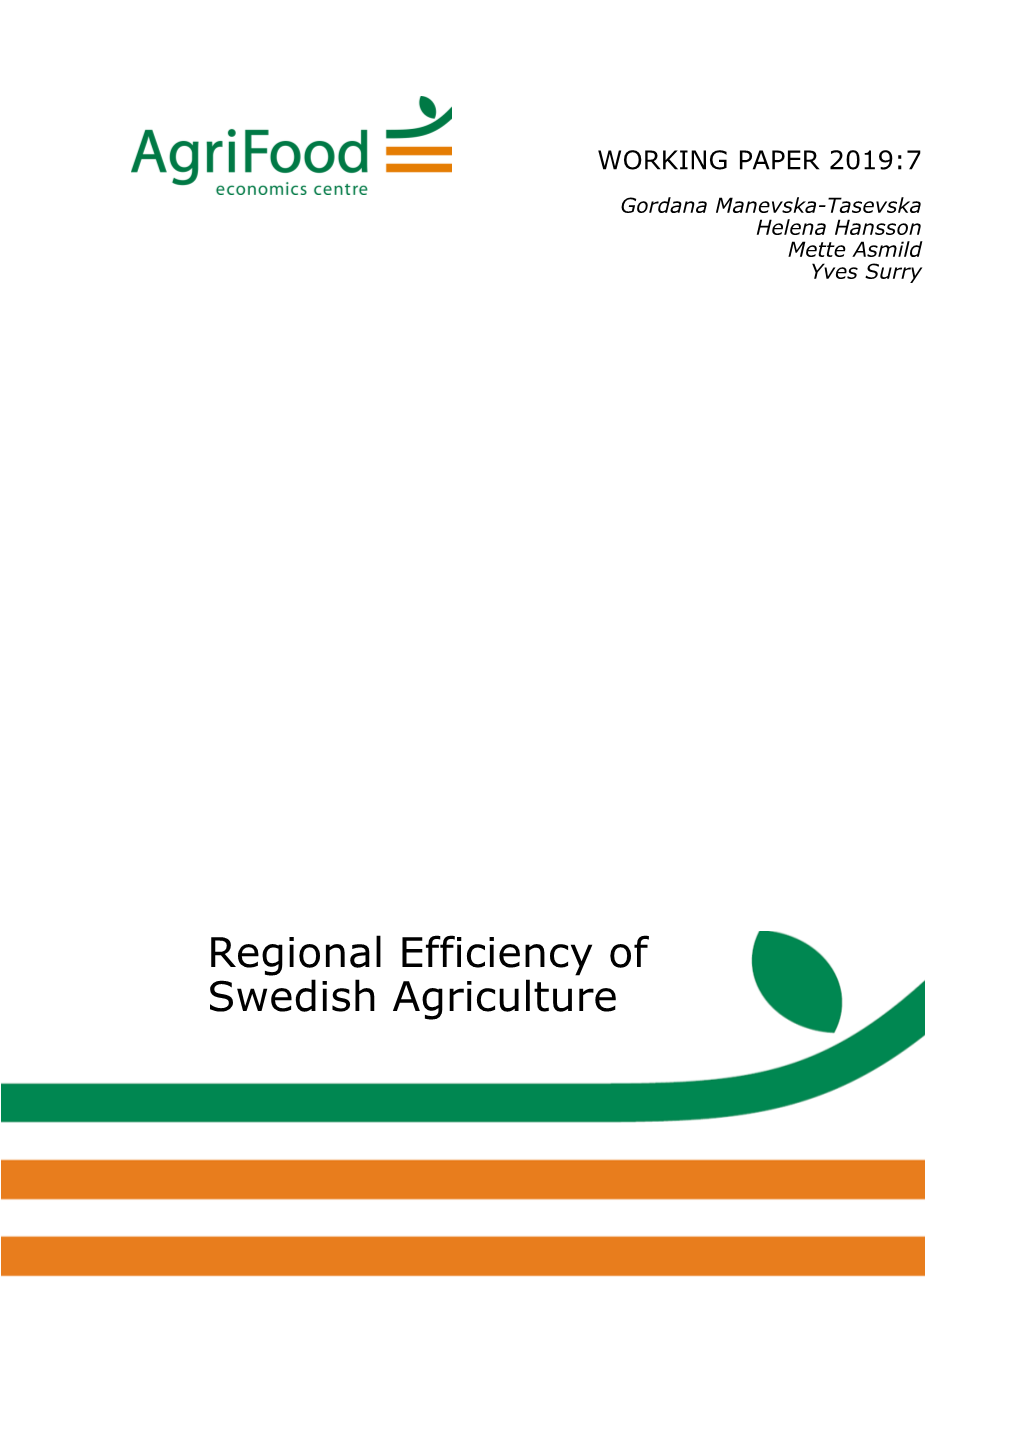 Regional Efficiency of Swedish Agriculture